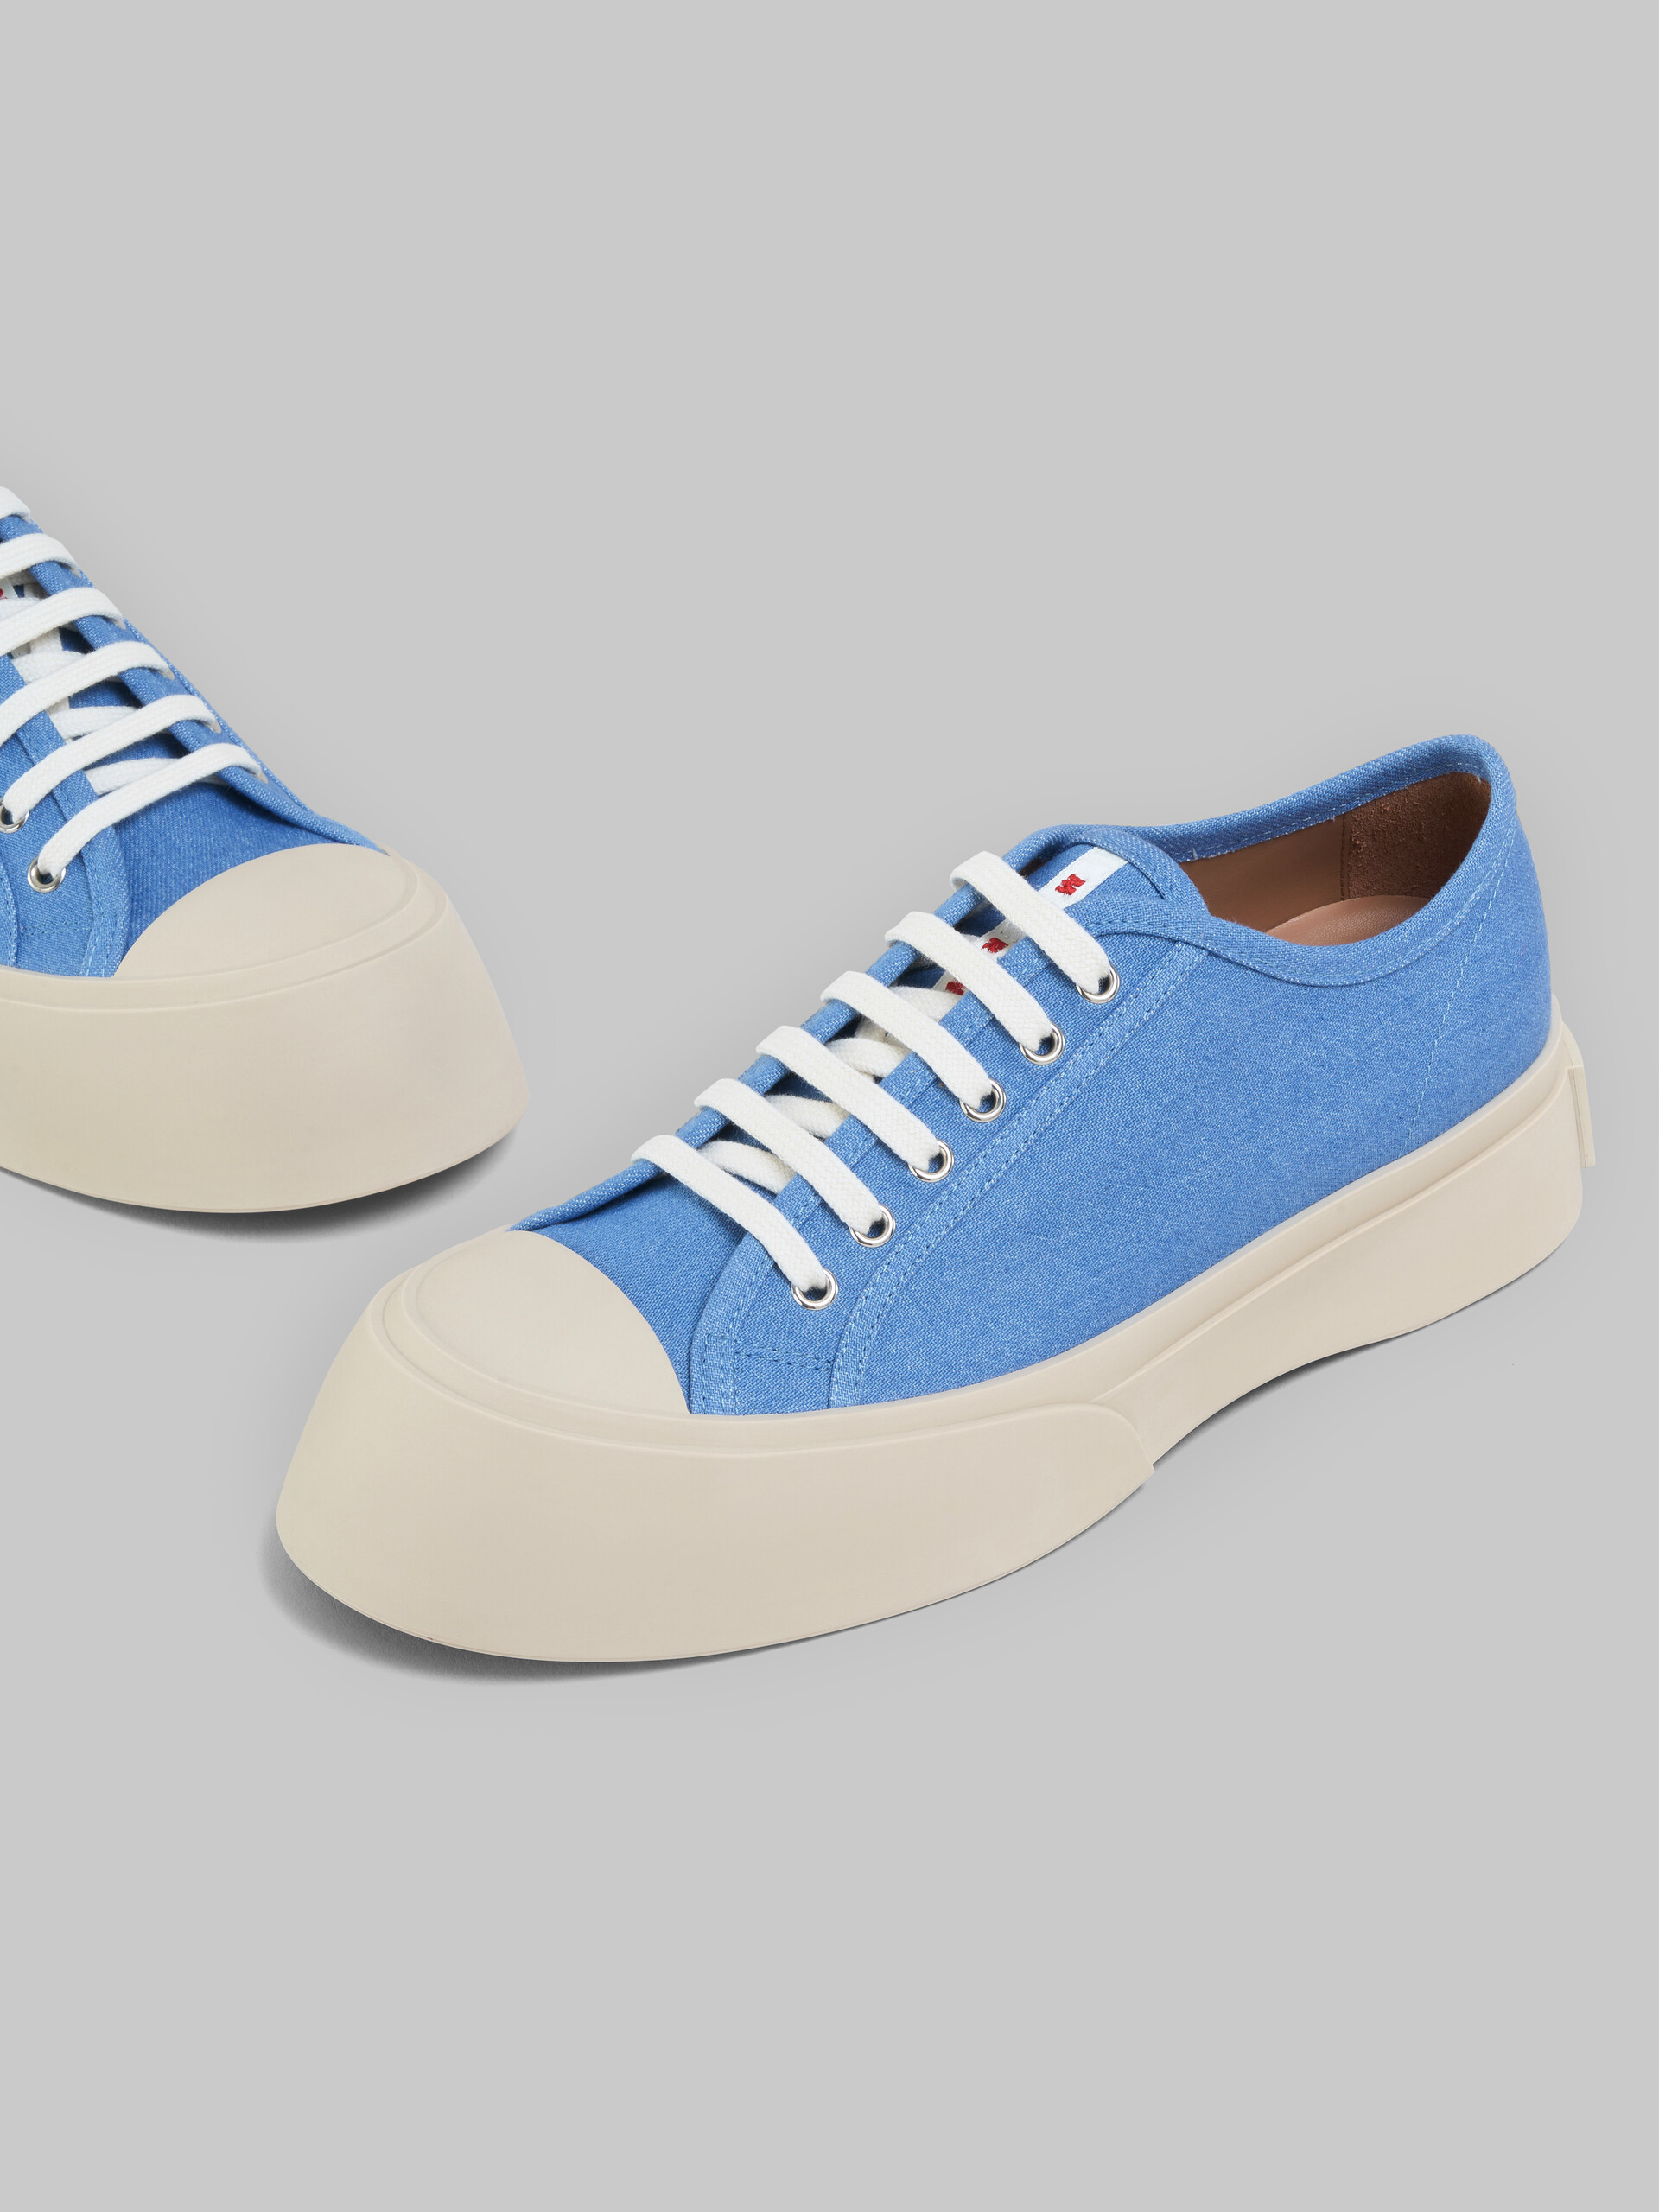 Hellblaue Sneakers Pablo aus Denim mit Schnürsenkeln - Sneakers - Image 5